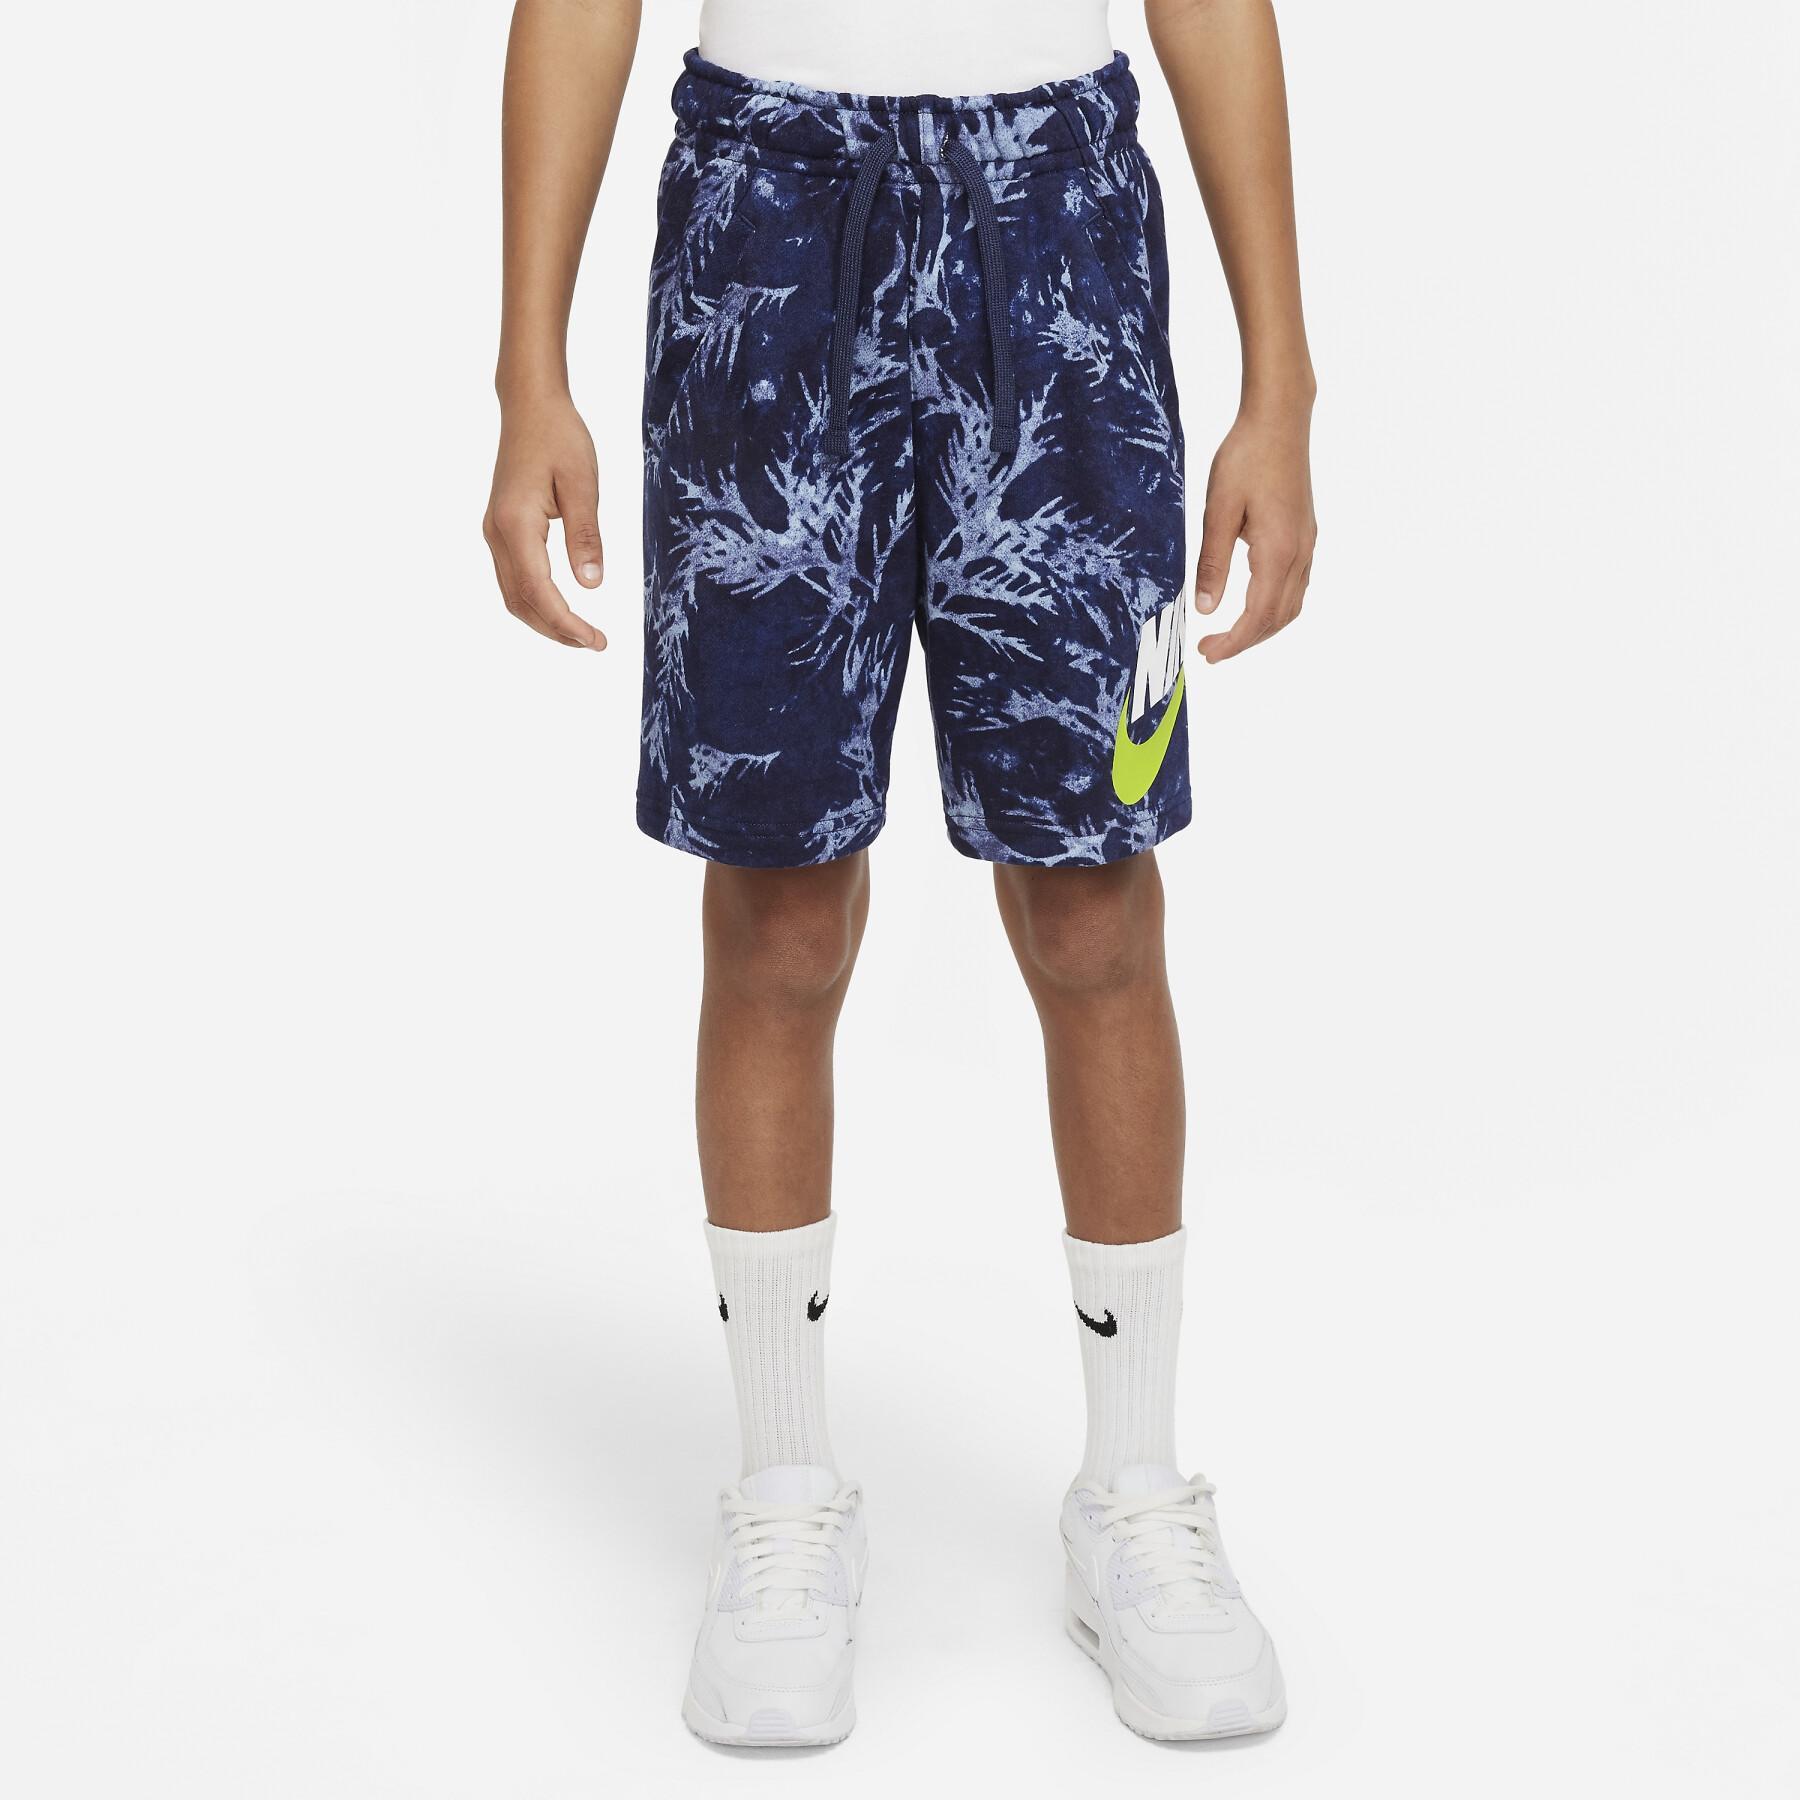 Pantalones cortos para niños Nike Washed Aop